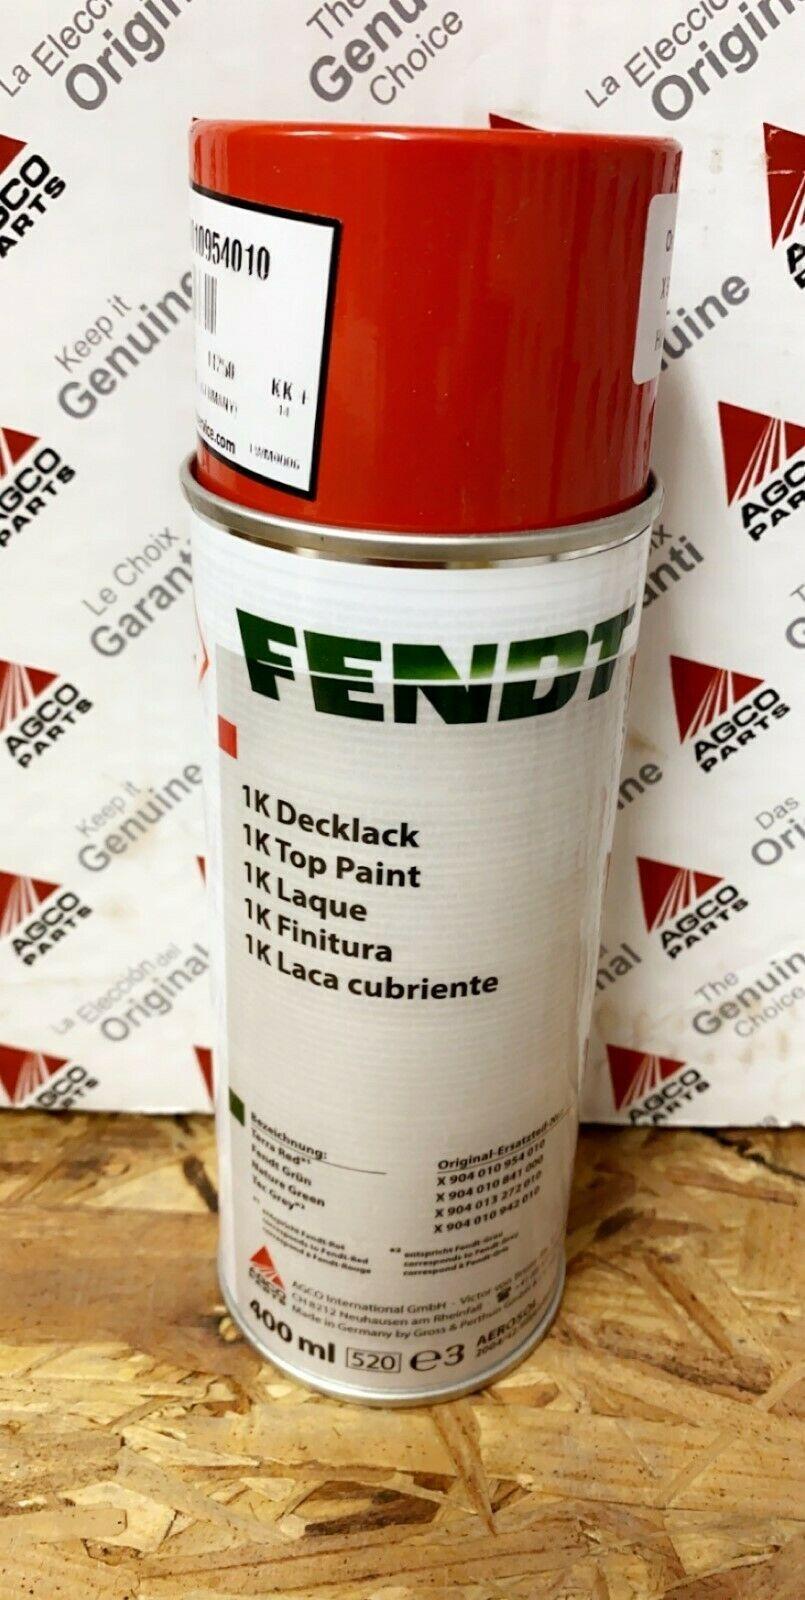 Fendt Red Paint Aerosol 400ml - X904010954010